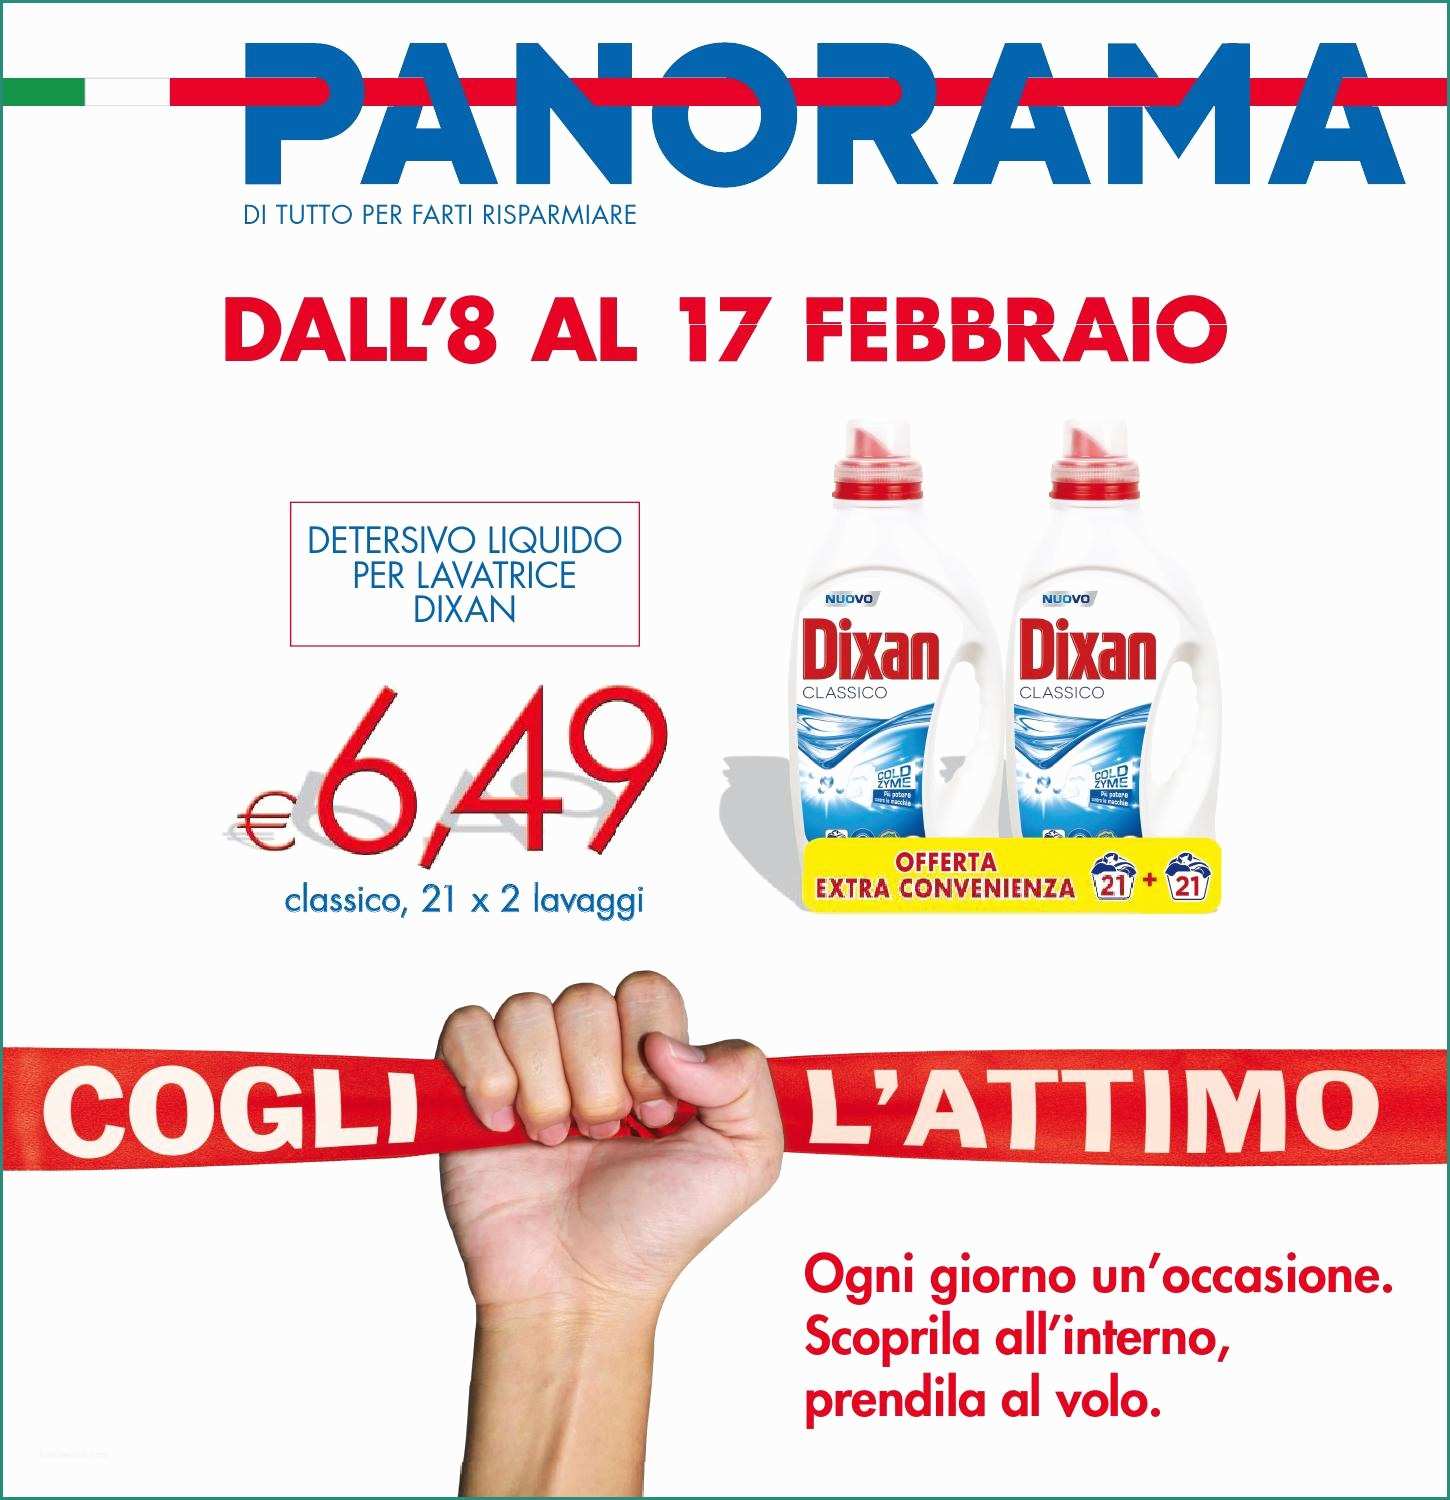 Residuo Fisso Acqua Panna E Panorama 17feb by Volavolantino issuu